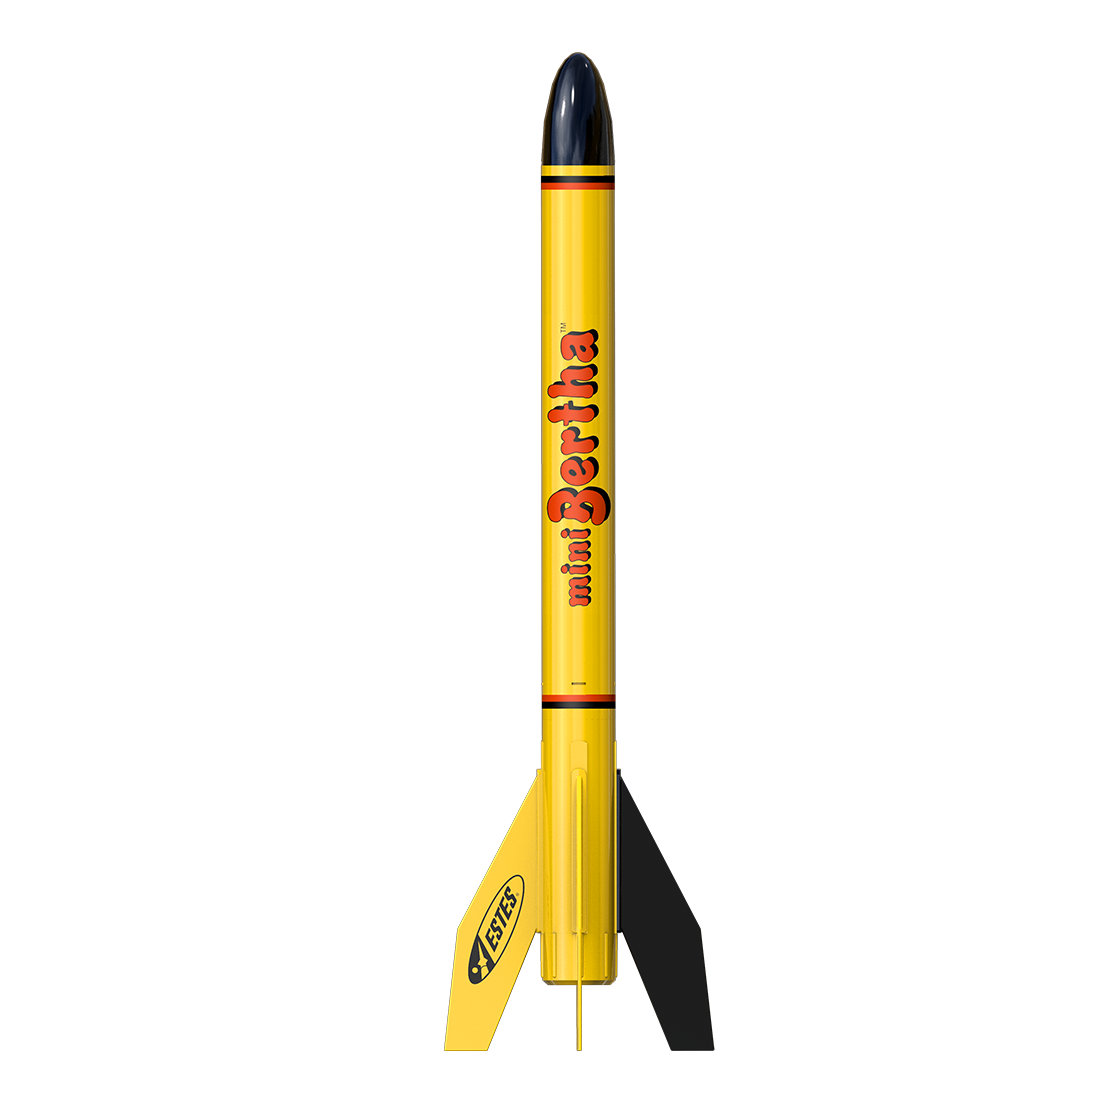 Mini Bertha Model Rocket